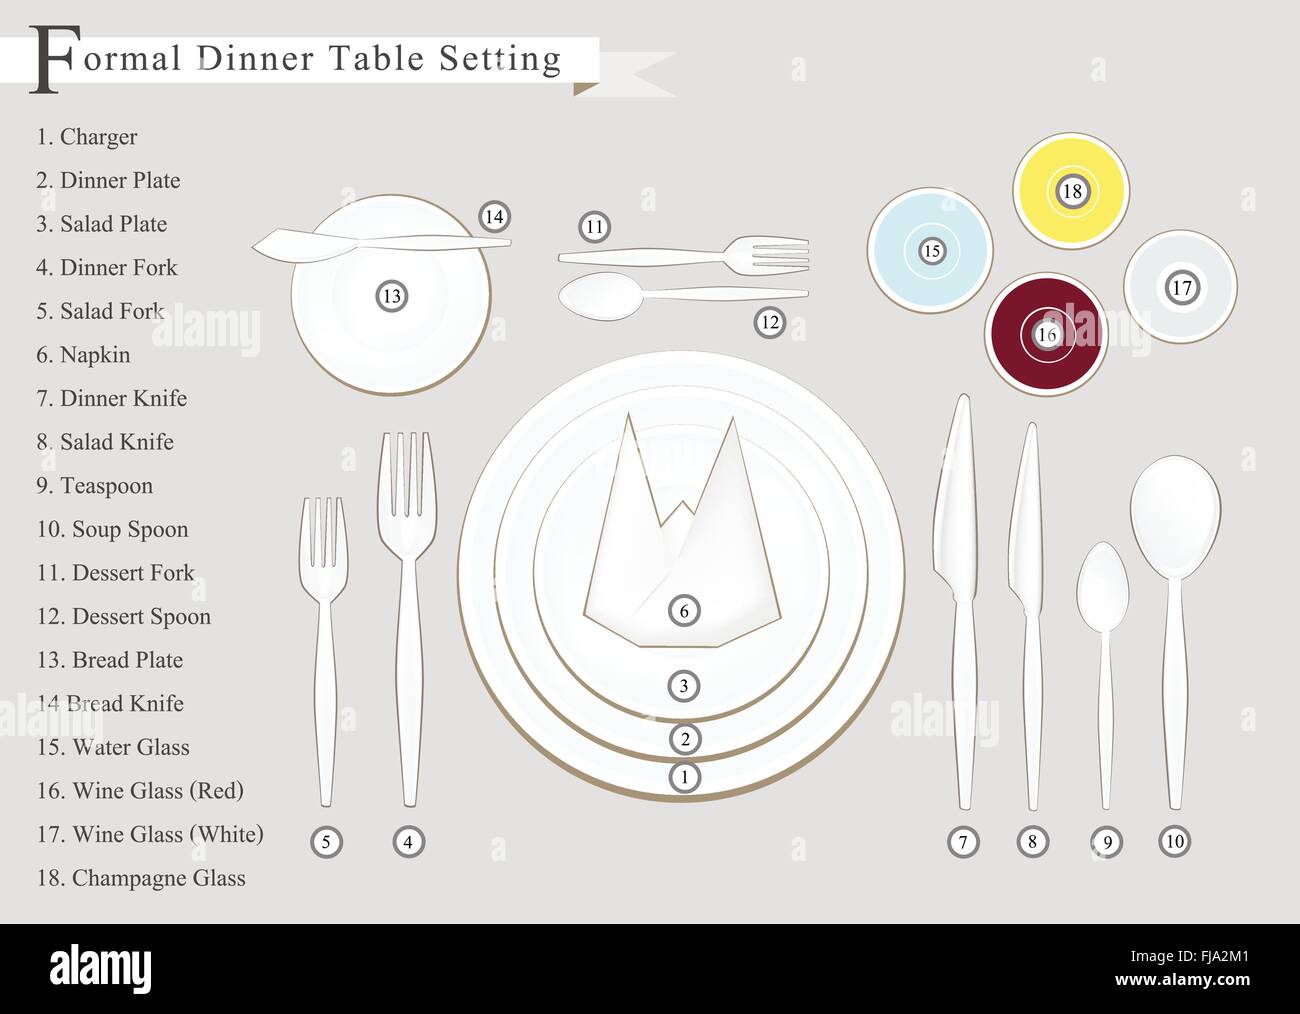 Formal Dinner, Business Dinner or Formal Dinner Table Setting Preparing for Special Occasions. Stock Vector